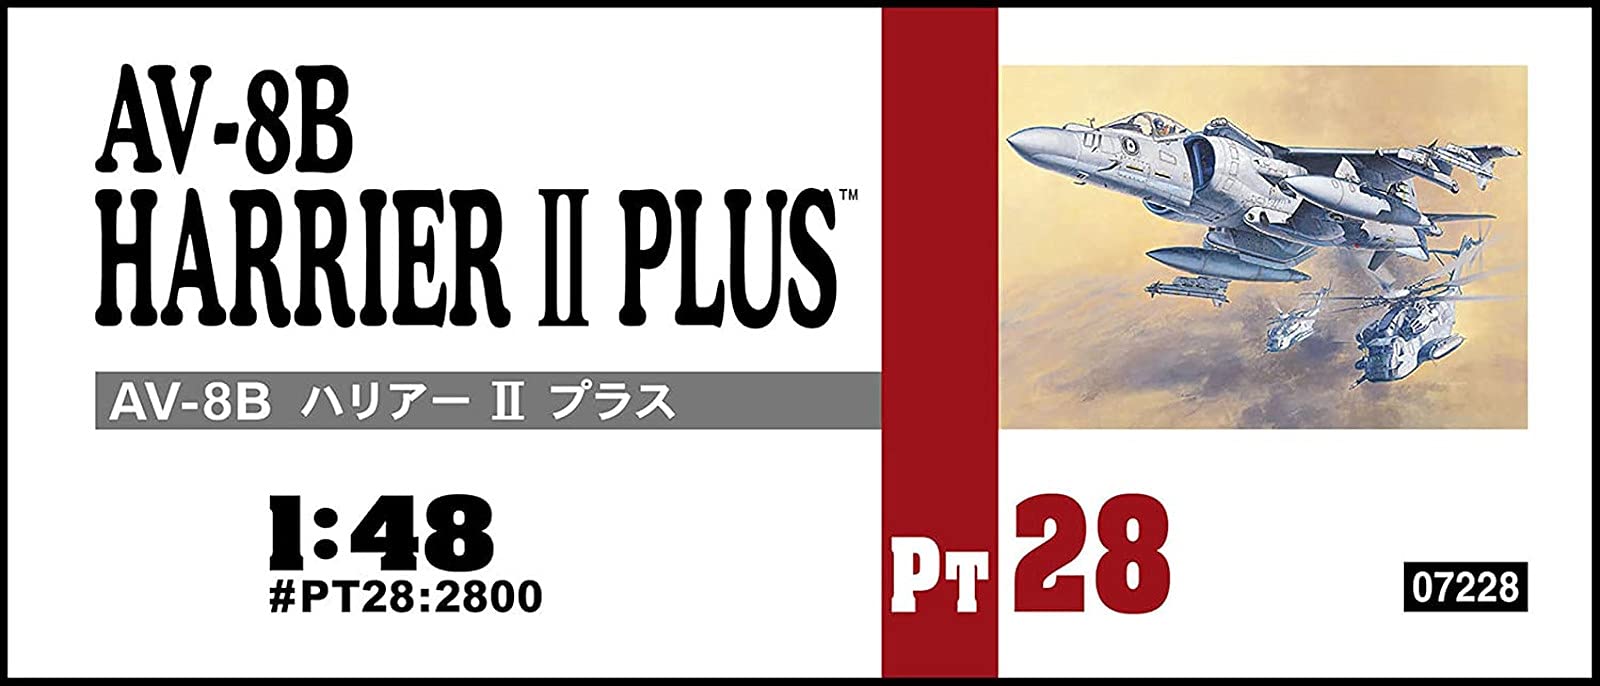 HASEGAWA 1/48 Av-8B Harrier Ii Plus USMC Attacker Plastique Modèle